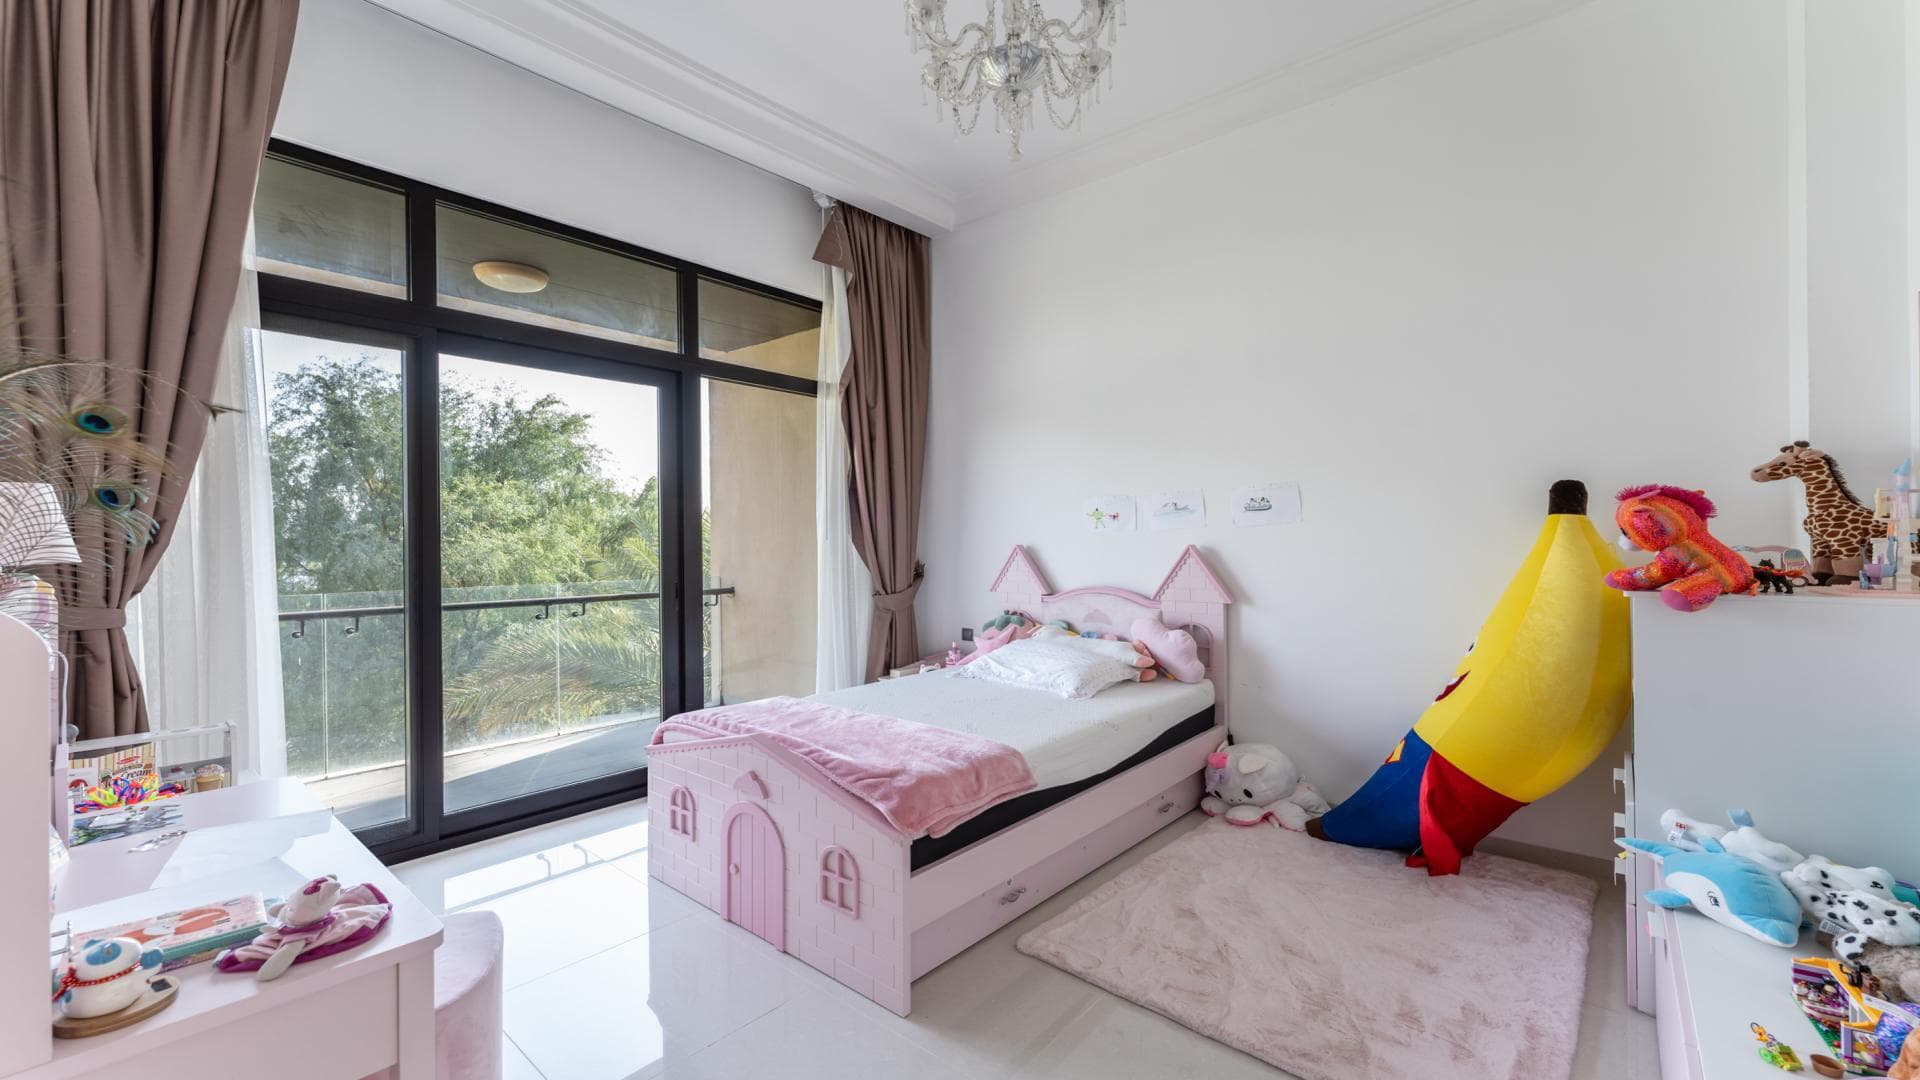 5 Bedroom Villa For Rent Rose 1 Lp38889 20b132e2c1b90200.jpg